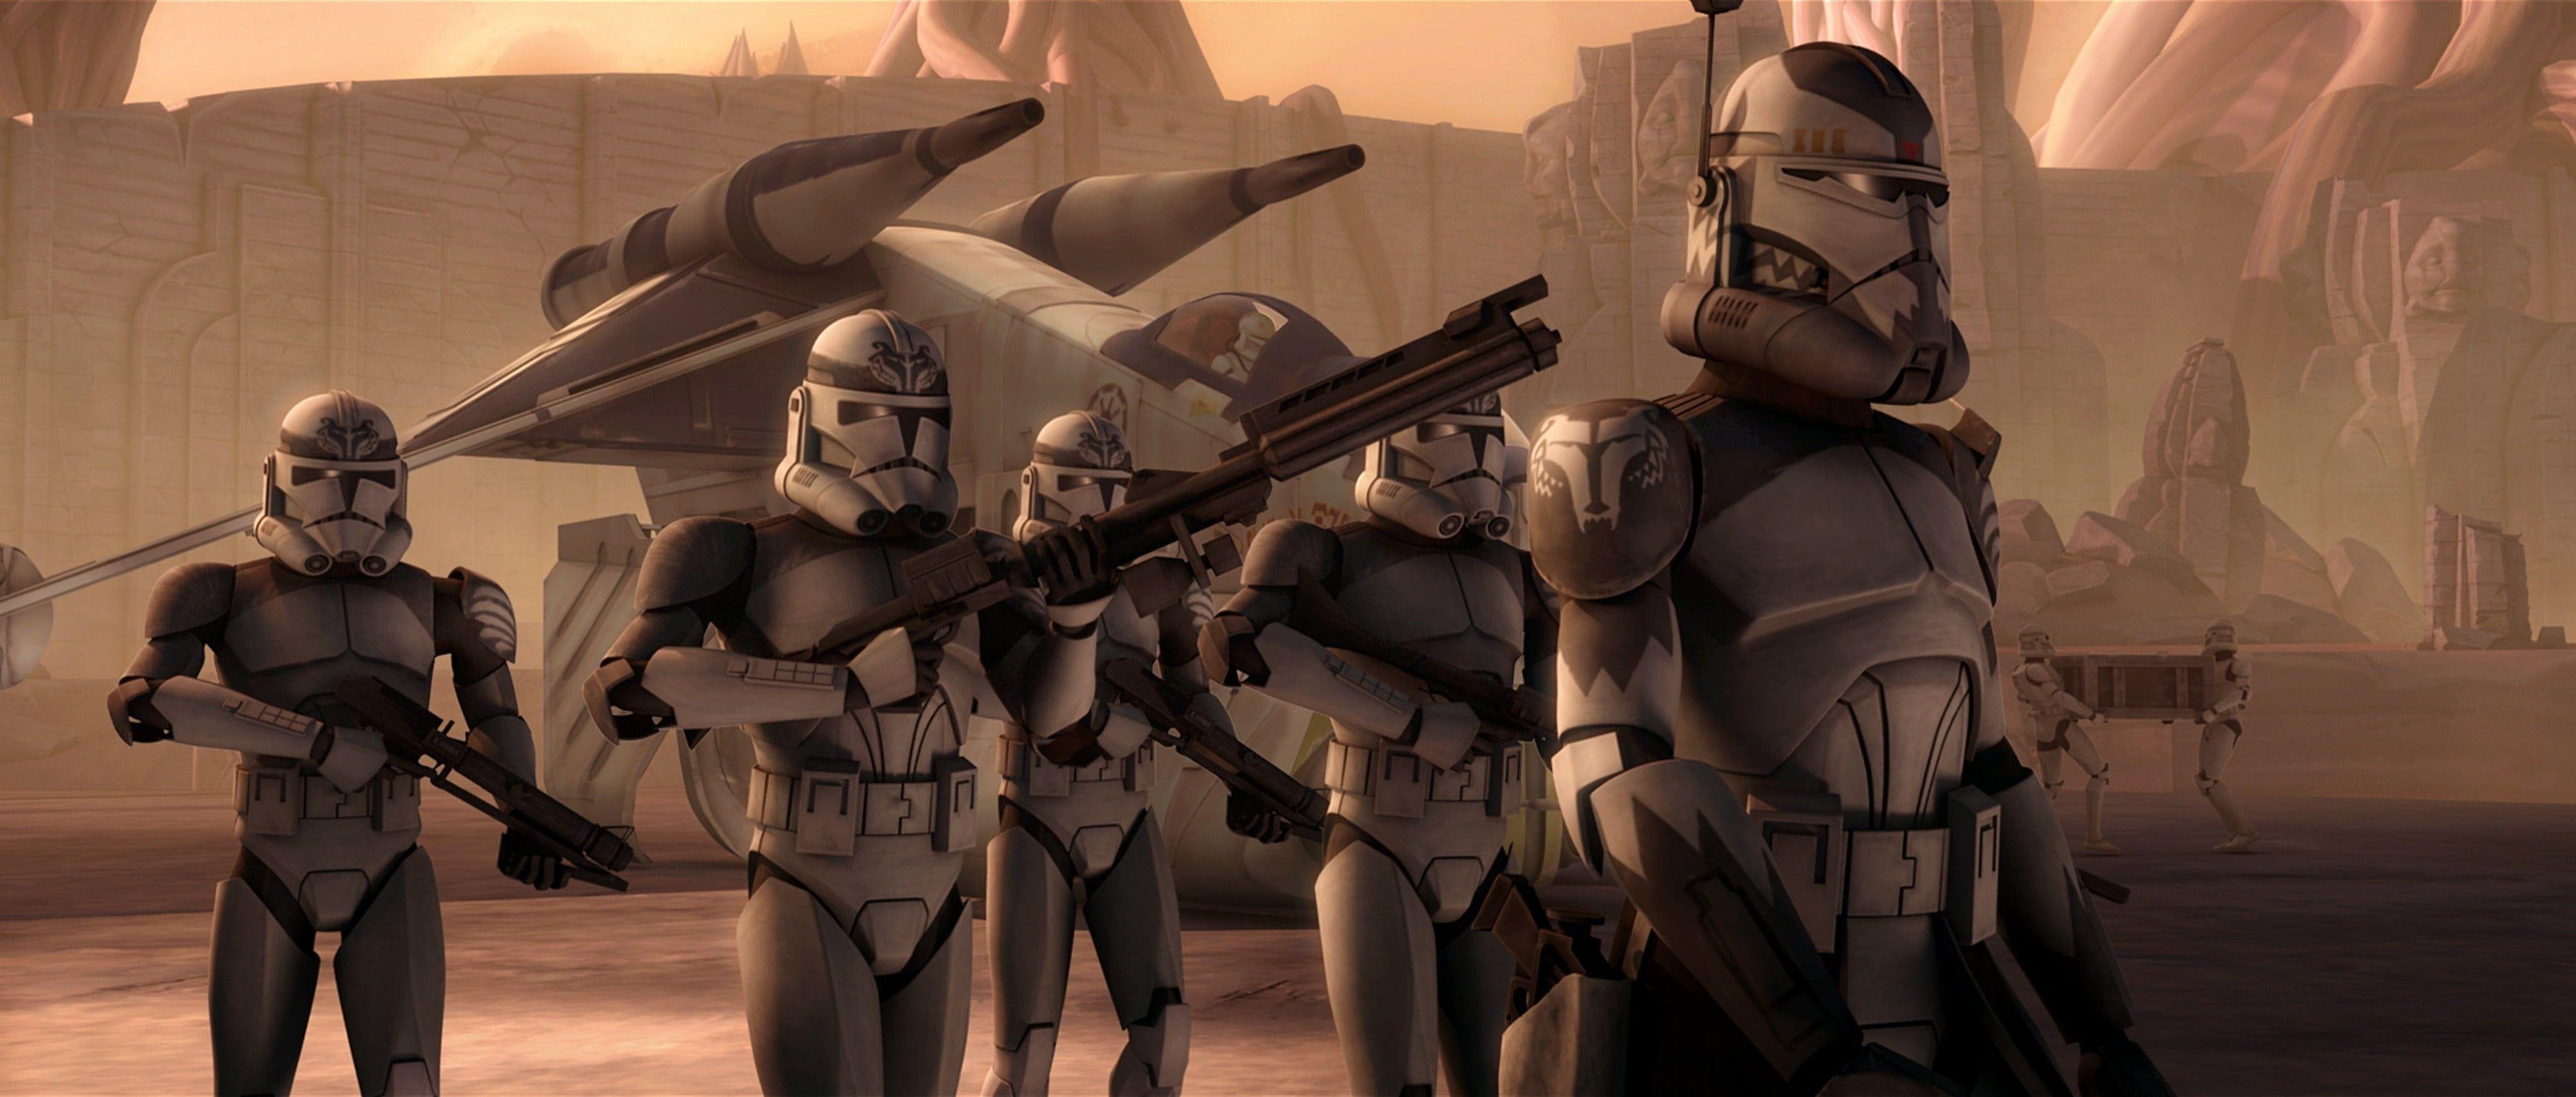 Star Wars stormtroopers illustration, Star Wars, clone